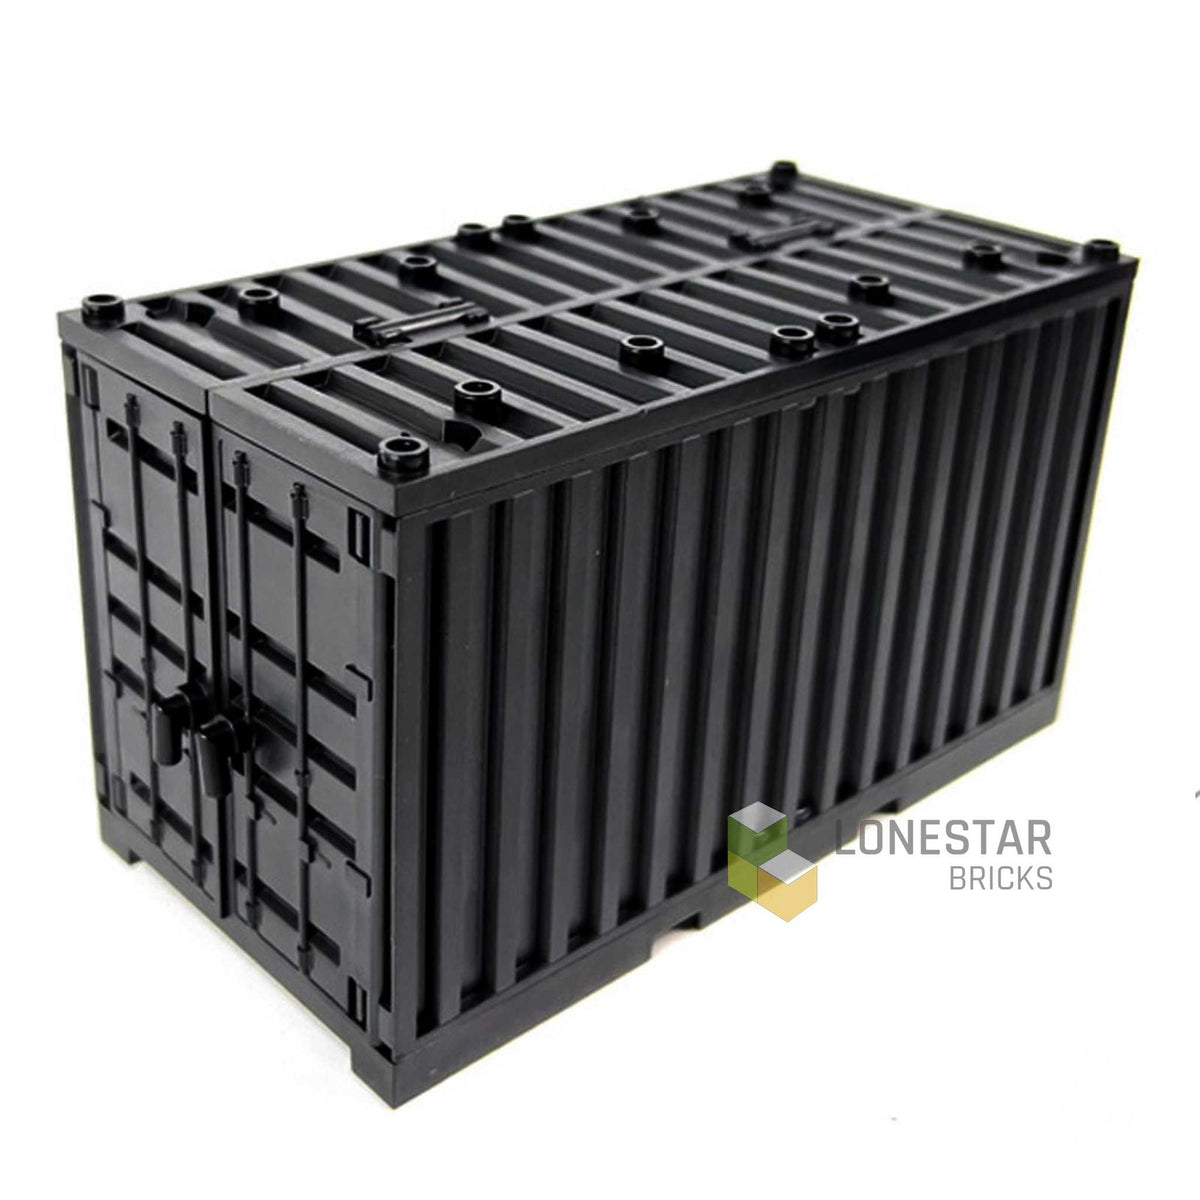 LB-70009 - Container schwarz (Lonestar Bricks)